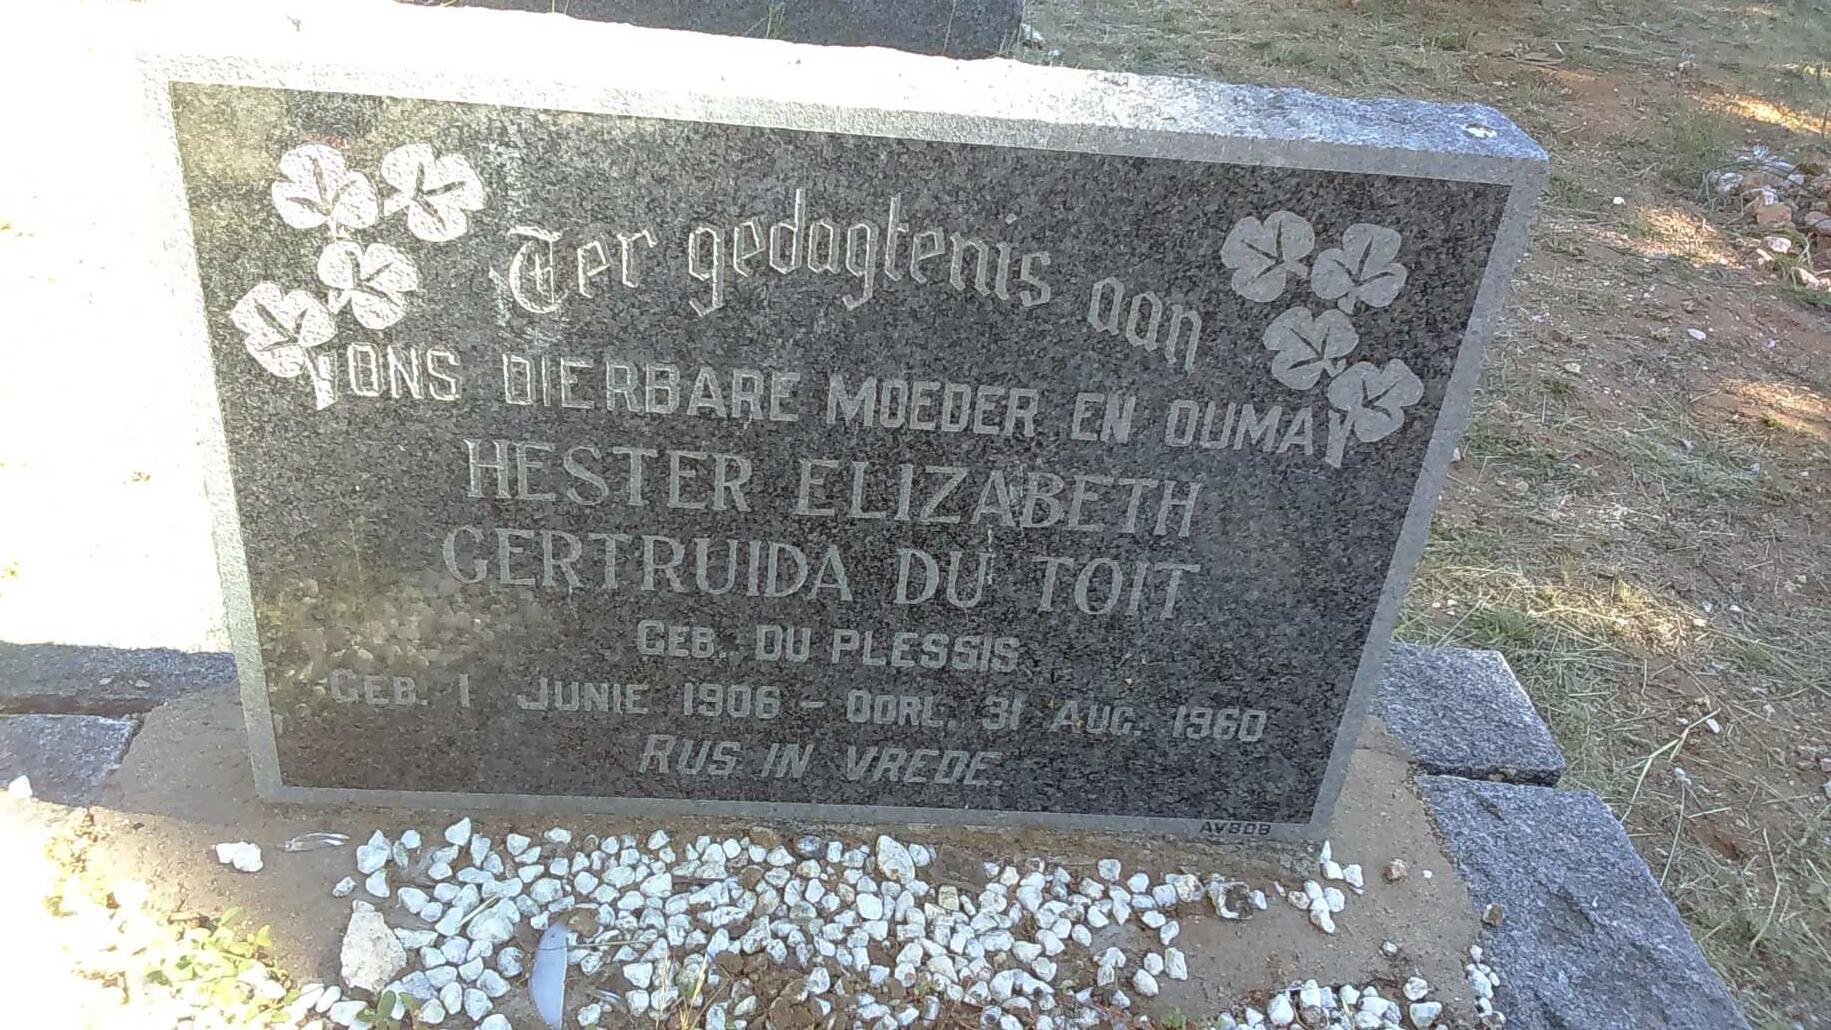 TOIT Hester Elizabeth Gertruida, du nee DU PLESSIS 1906-1960